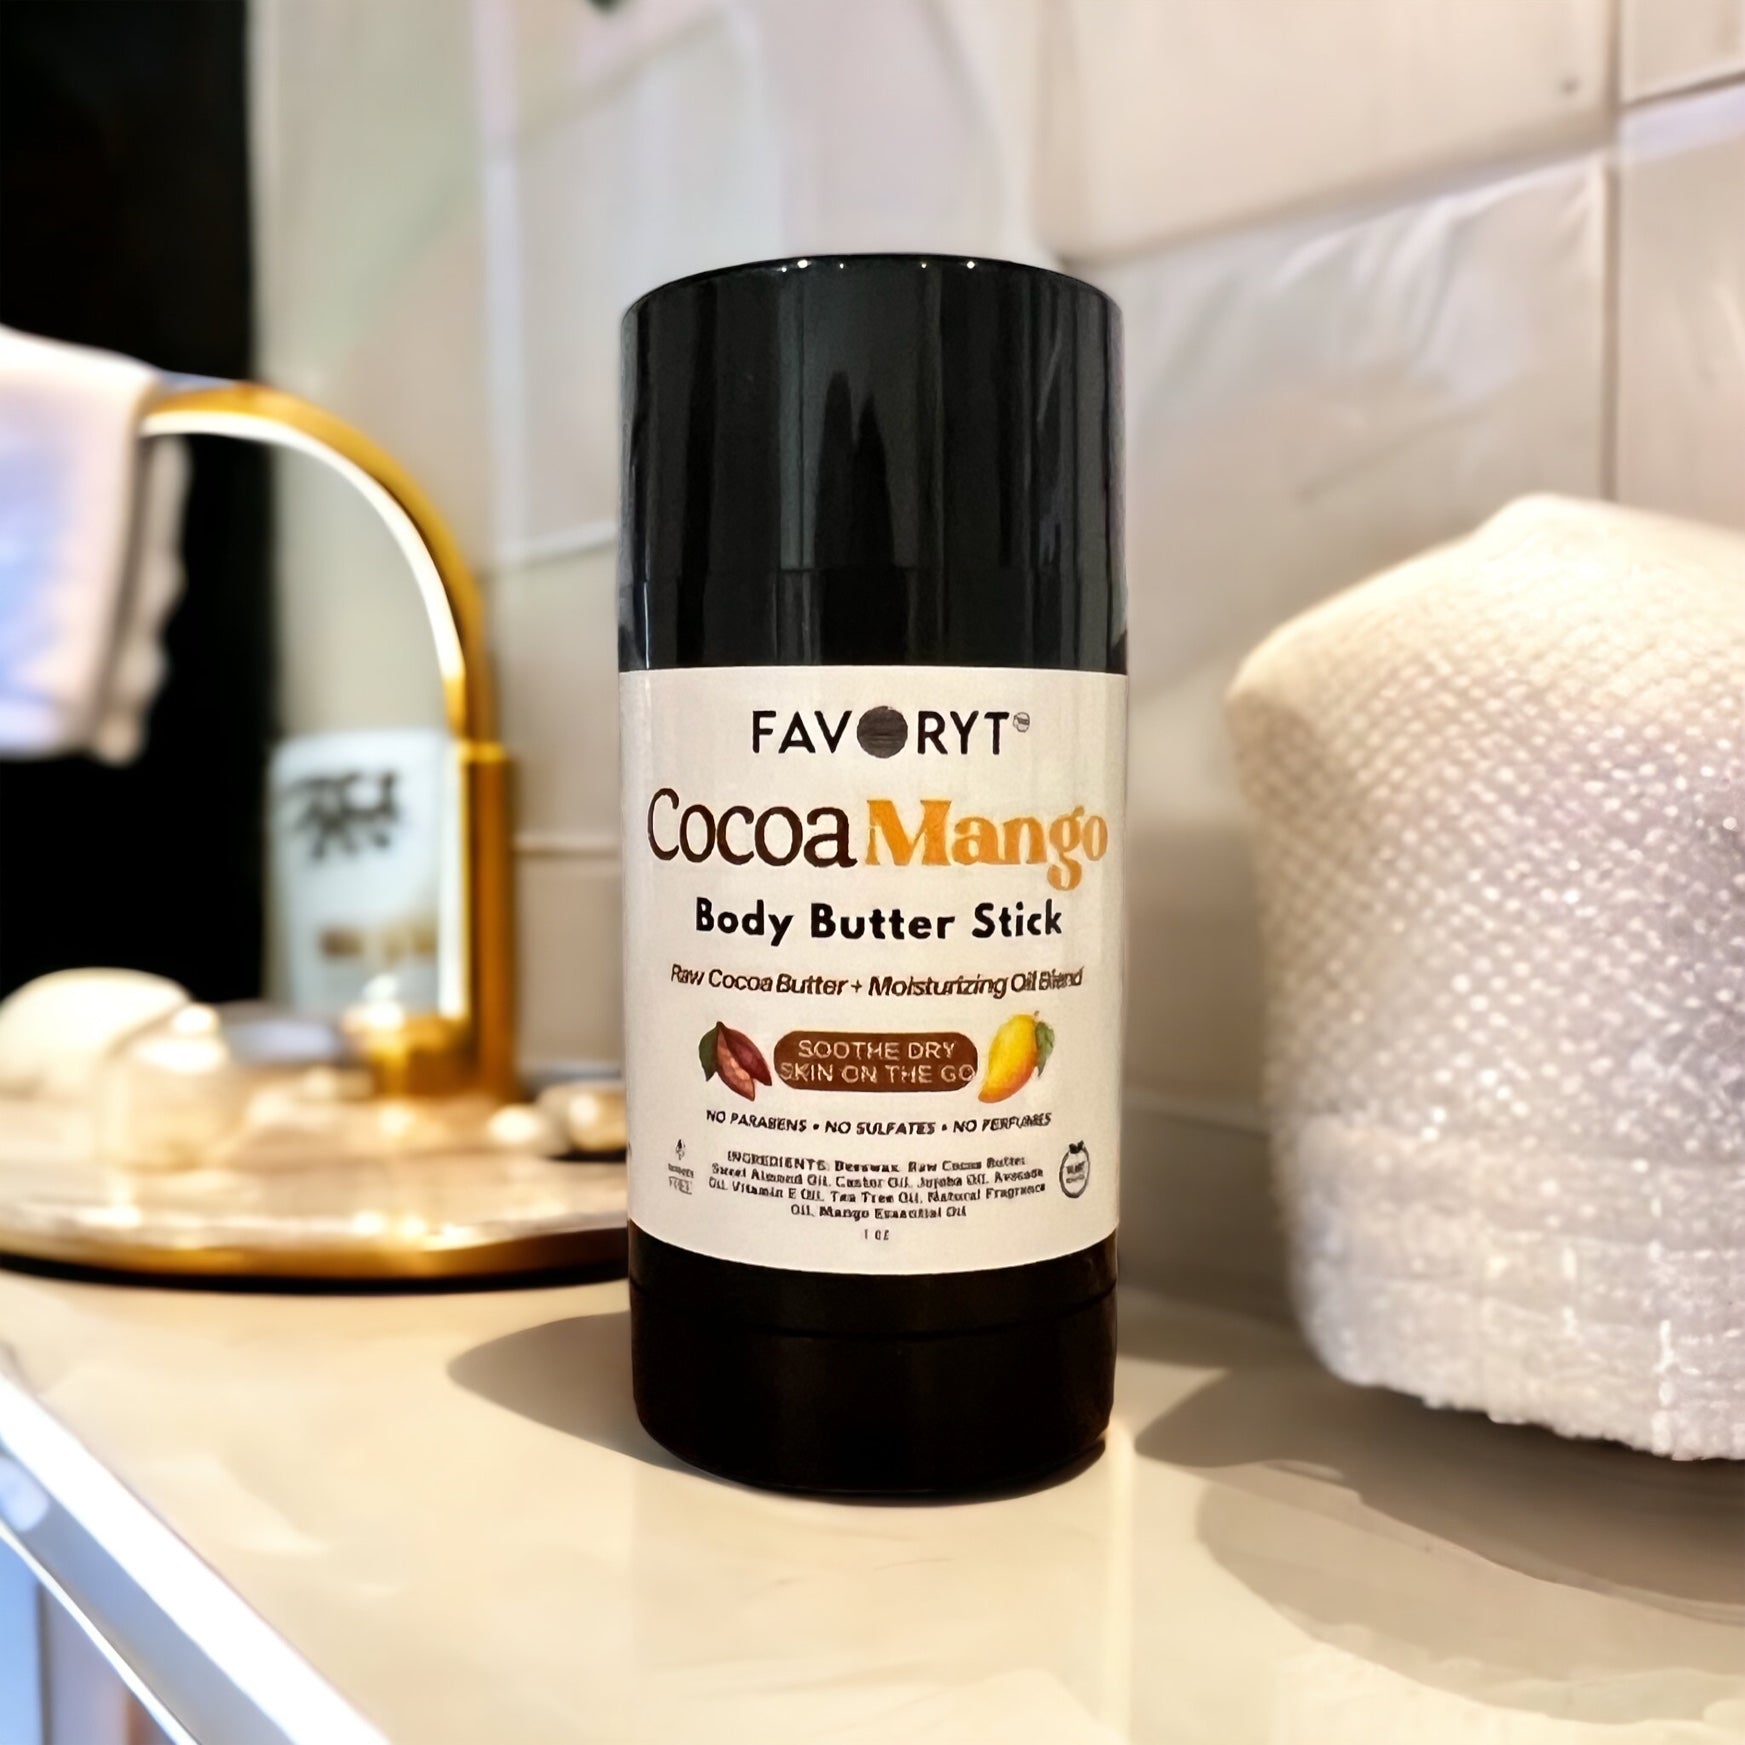 Cocoa Mango Cocoa Butter Skin Balm Stick - FAVORYT BRAND